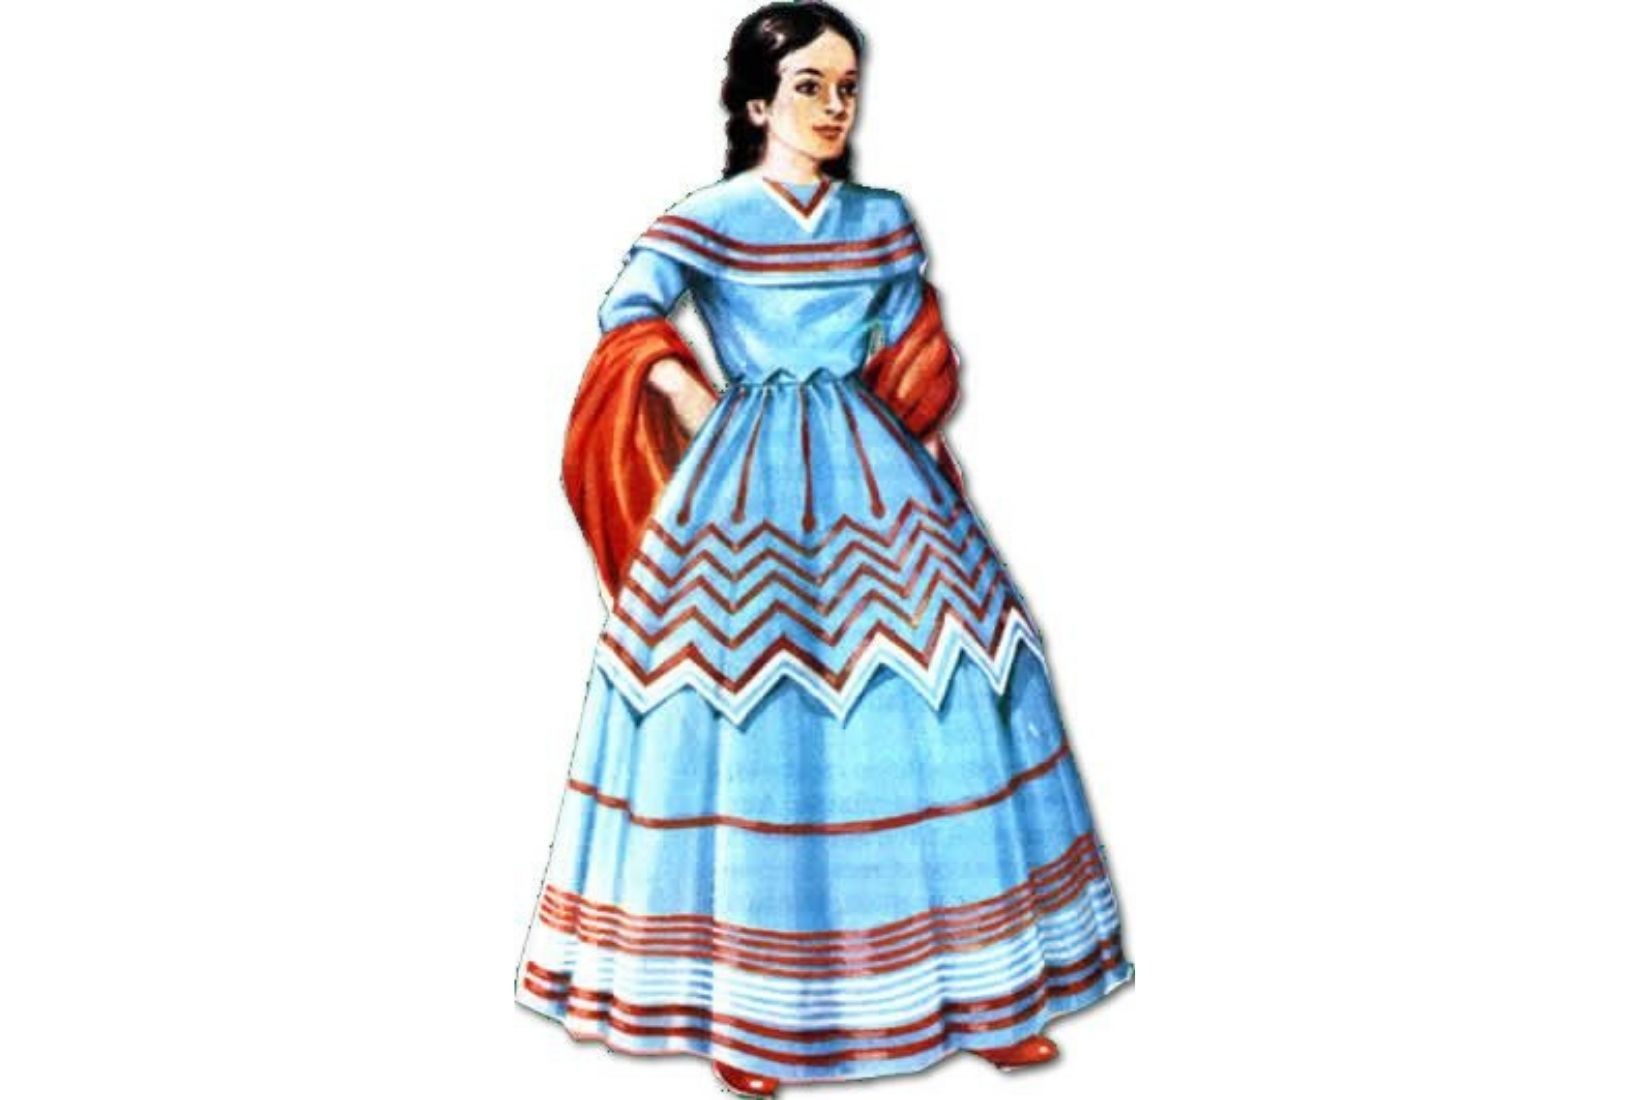 Representación de vestimenta tradicional de Durango.